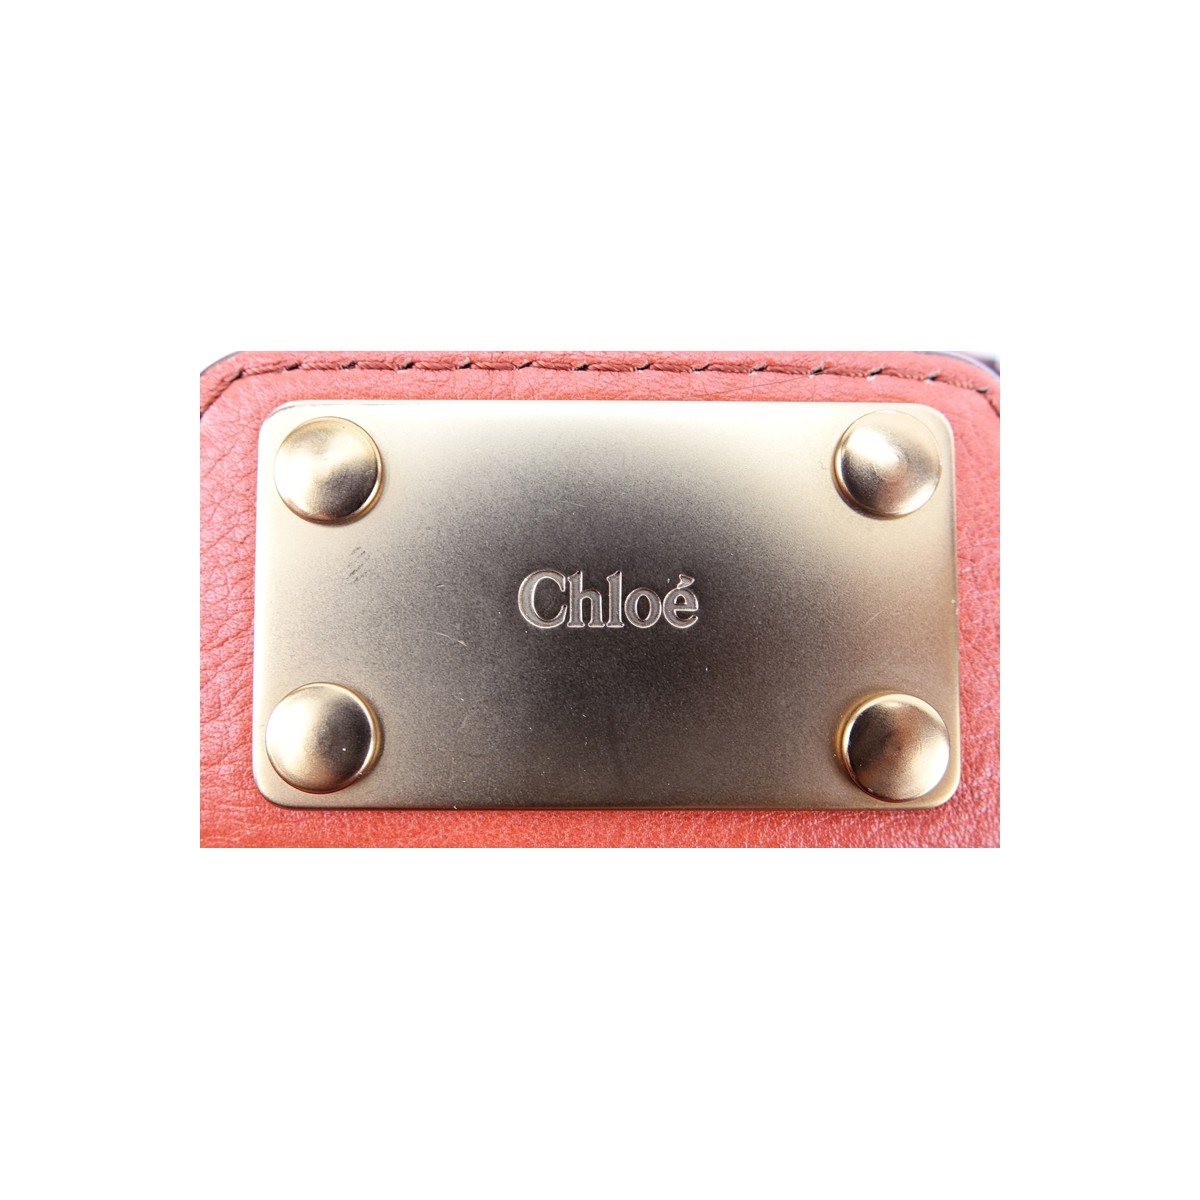 Chloe Dark Orange Grained Leather Paddington MM Handbag. Brushed gold tone hardware, beige fabric interior with zippered and patch pockets.